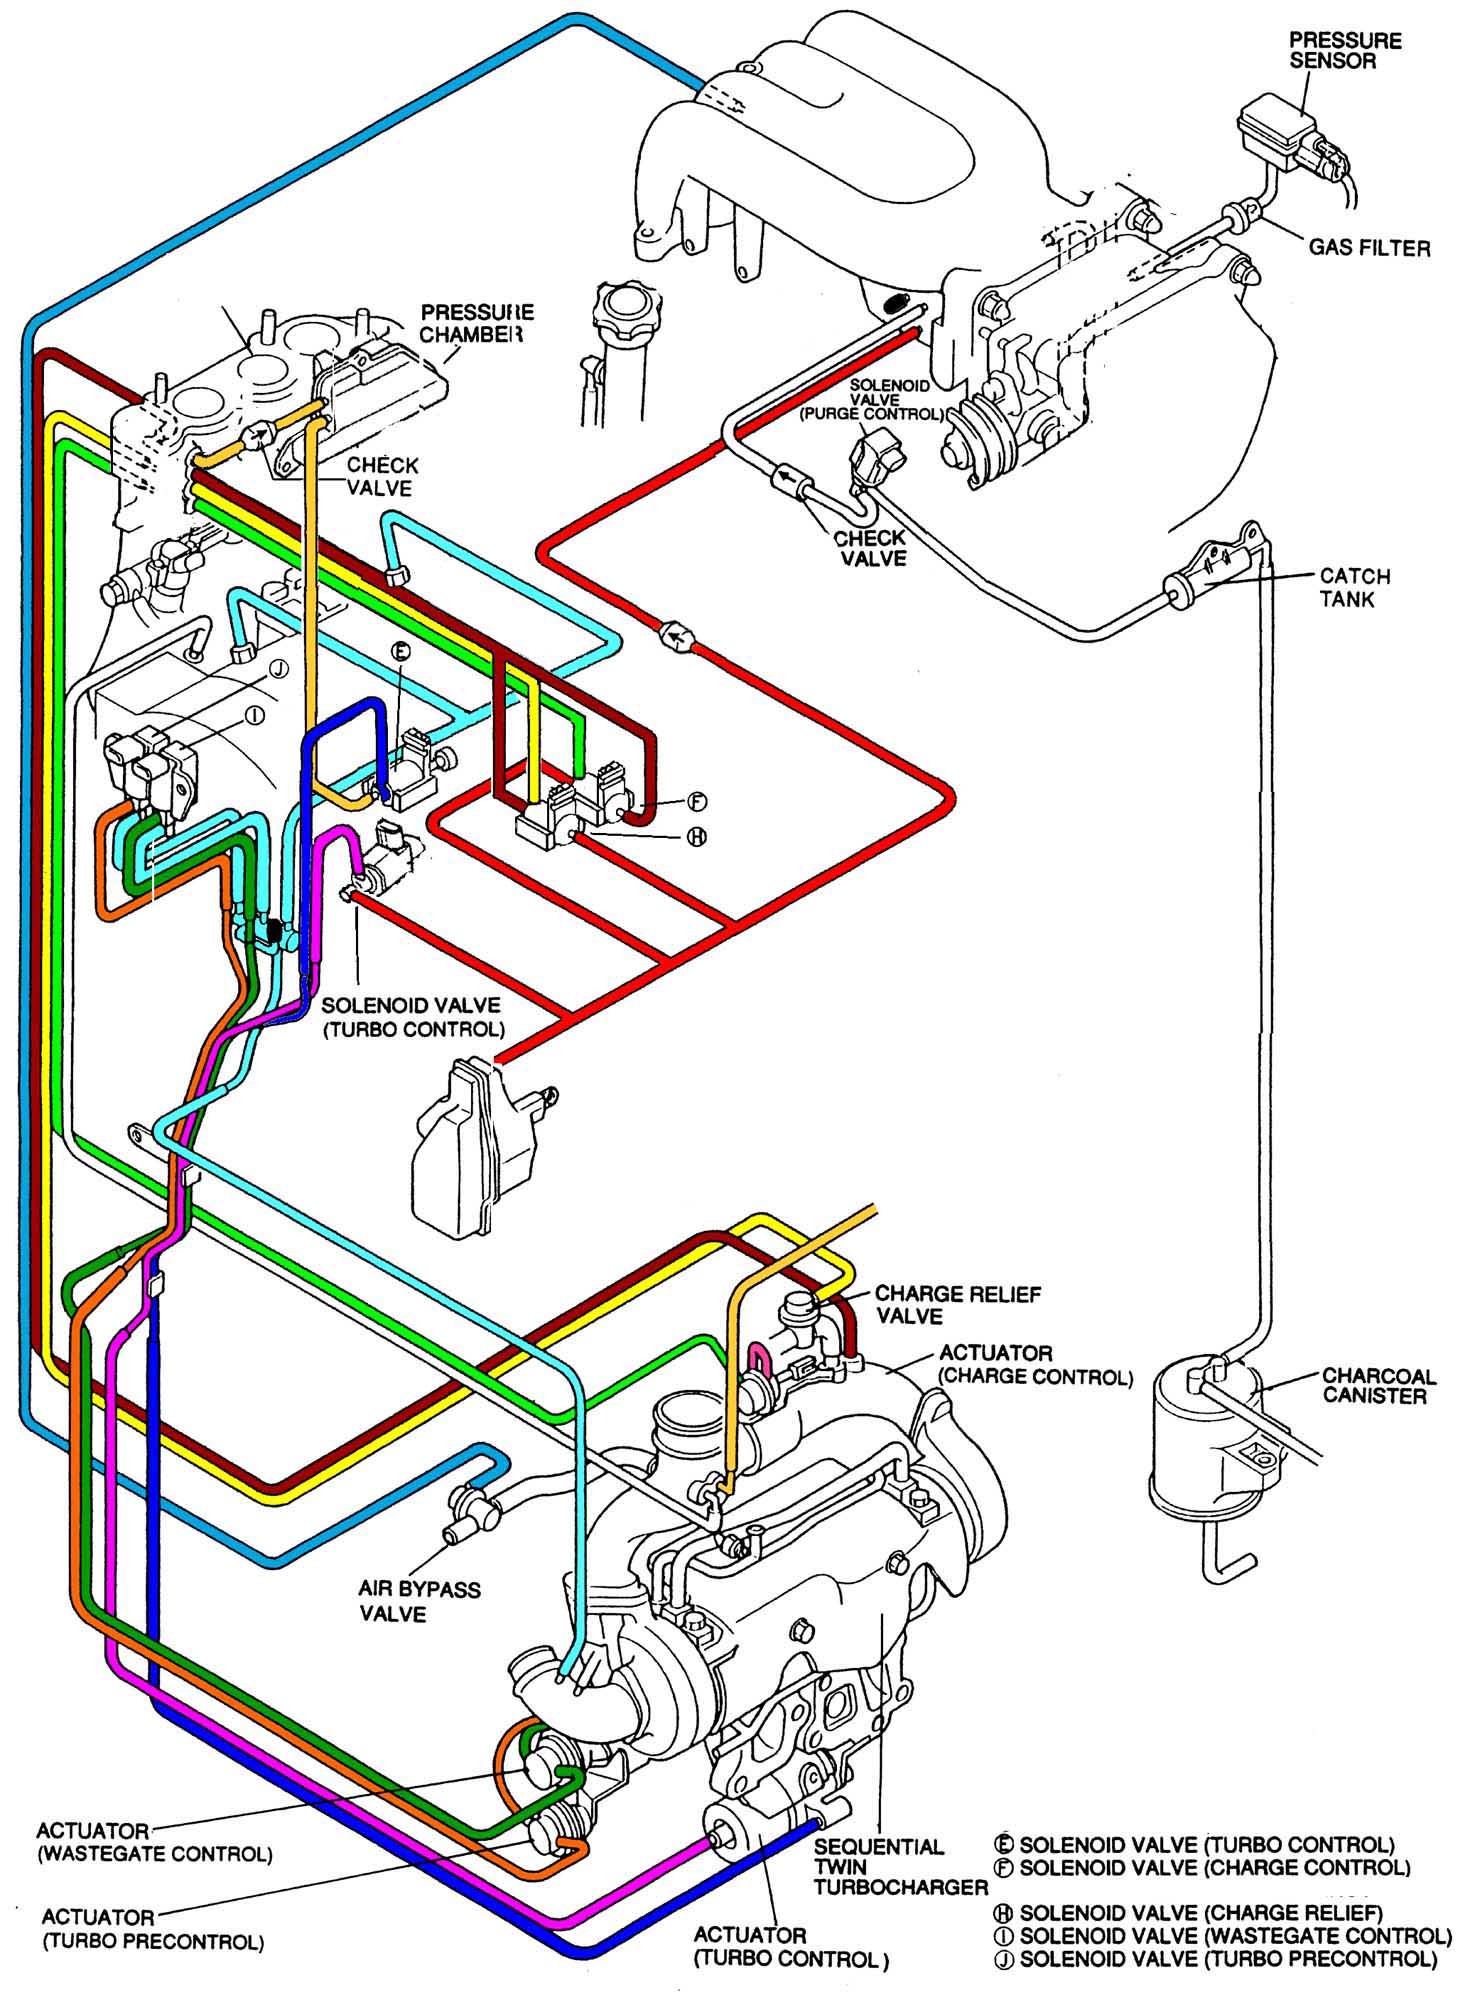 Engine Lubrication System Diagram Pound Vs Sequential Vs True Twins Turbo S Dodge Cummins Diesel Of Engine Lubrication System Diagram